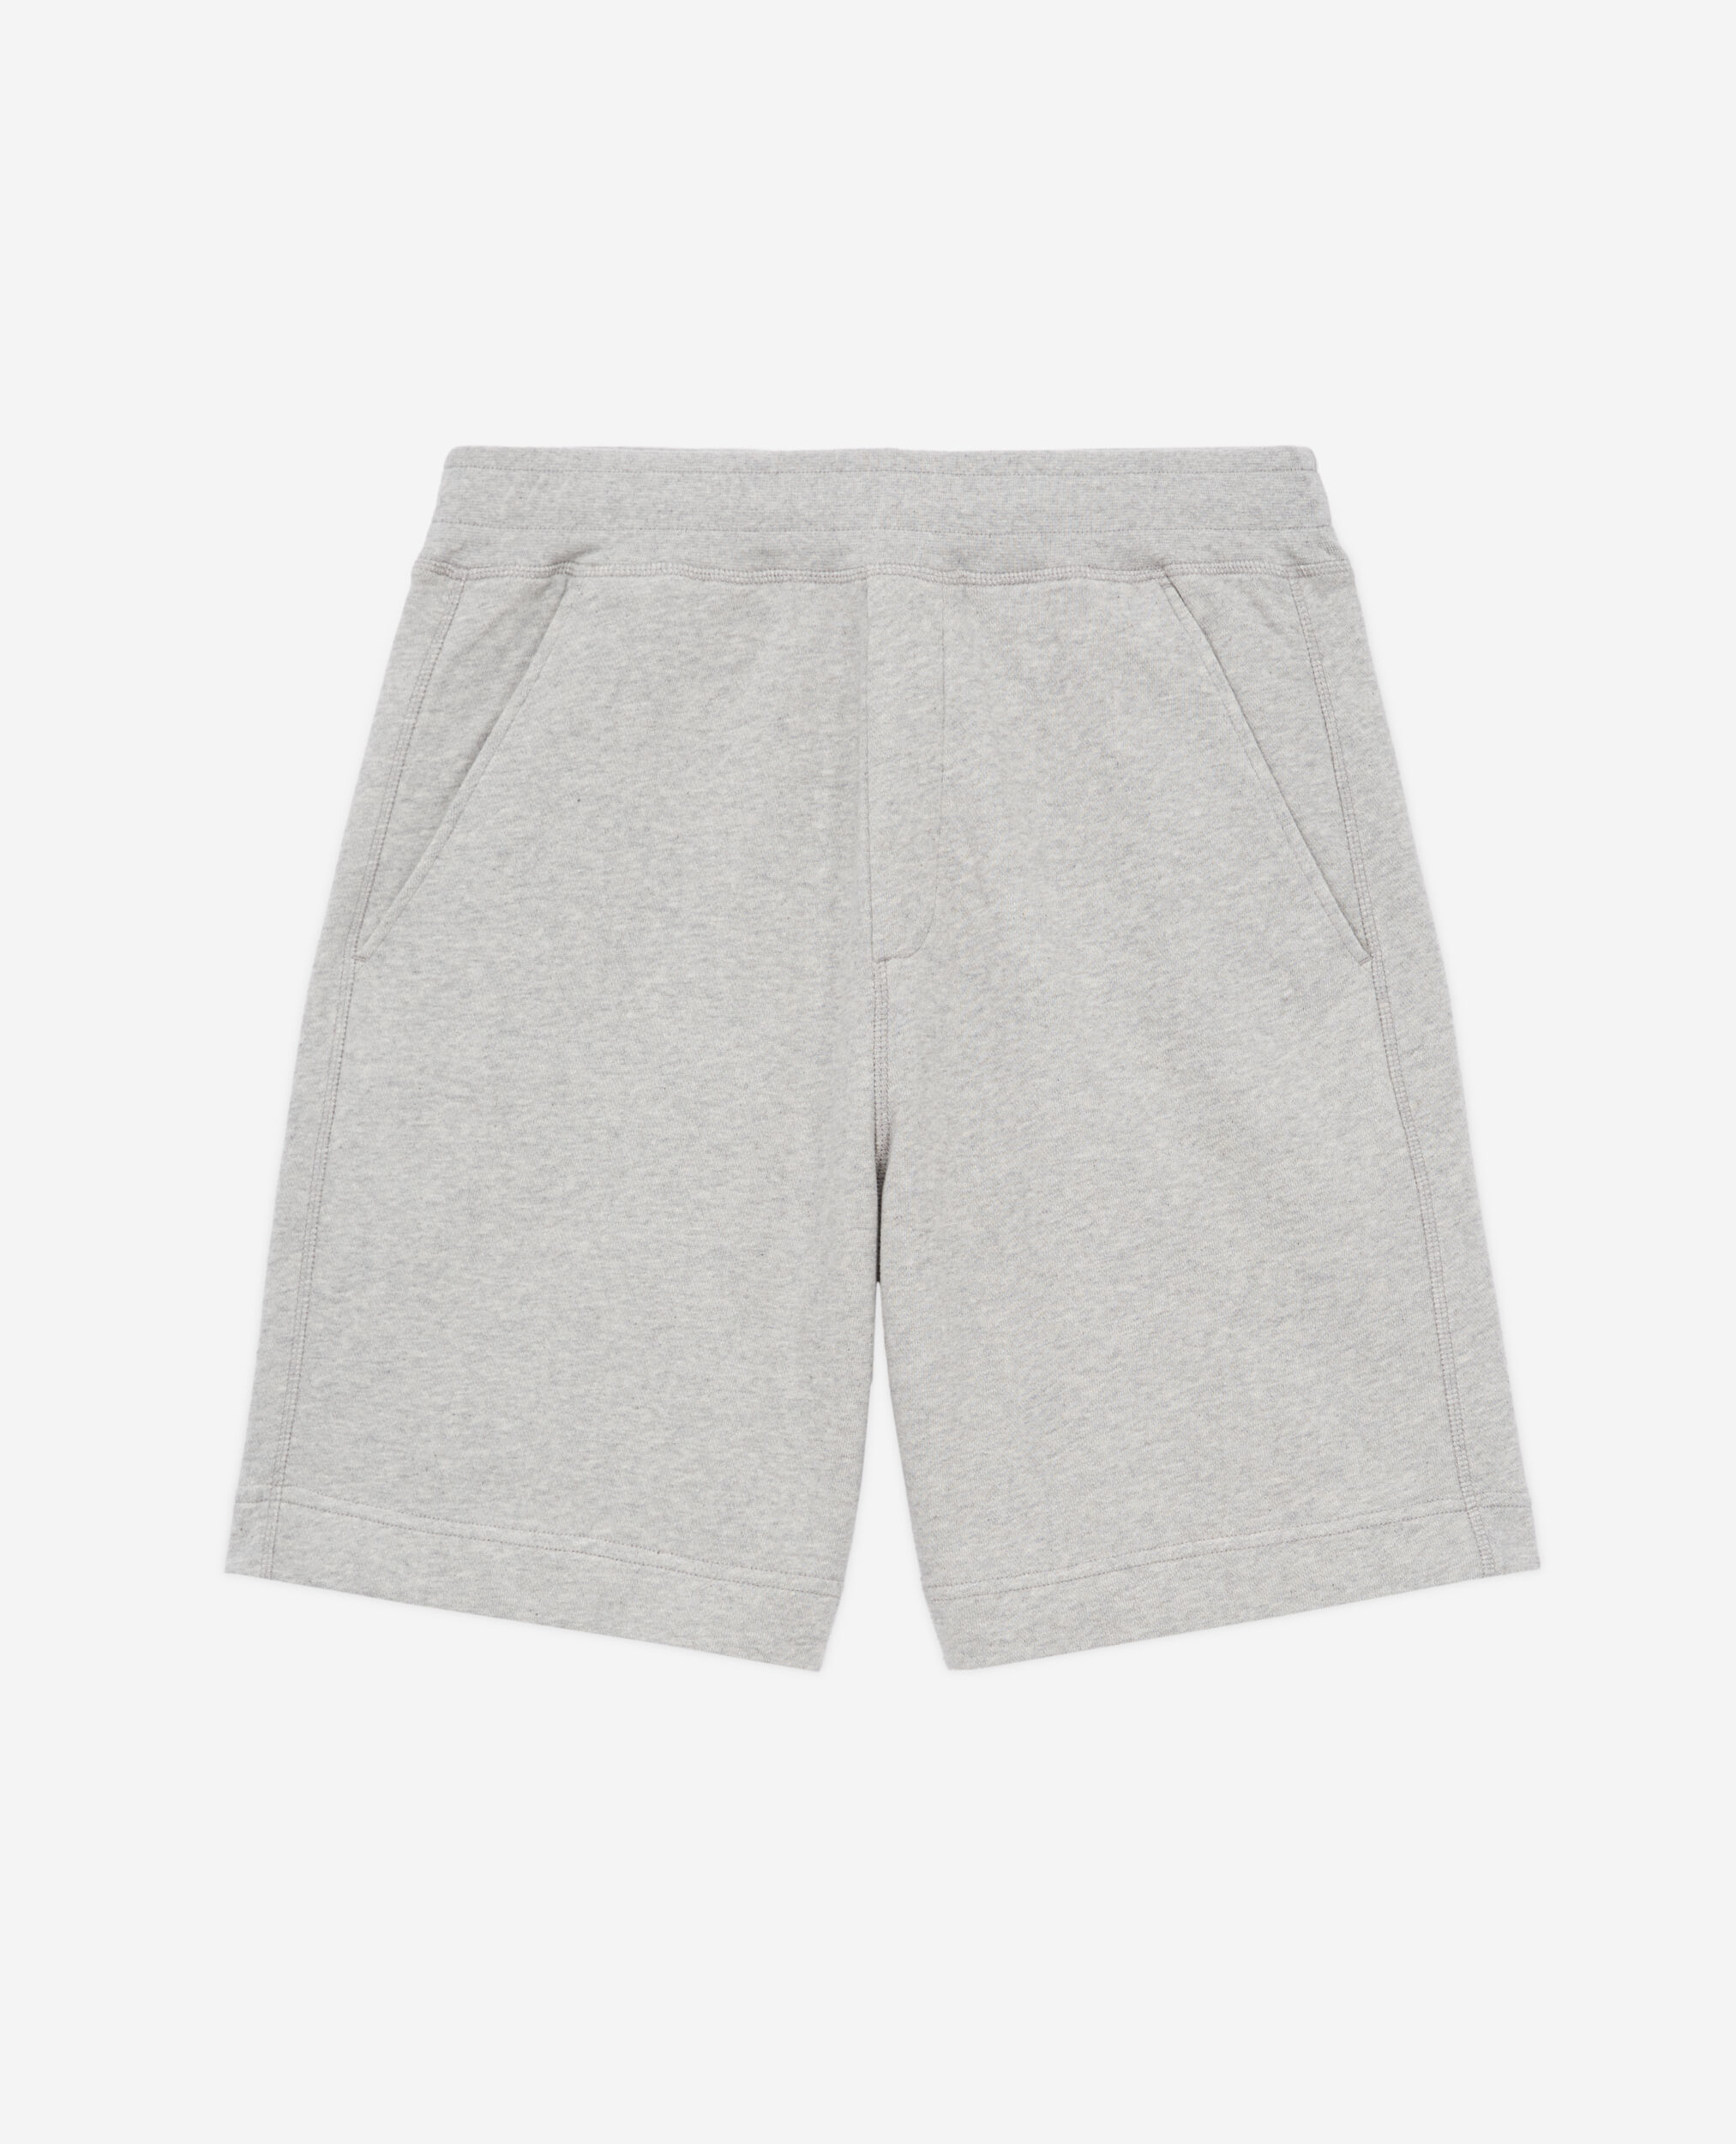 Pantalones cortos muletón gris claro, GRIS CLAIR, hi-res image number null